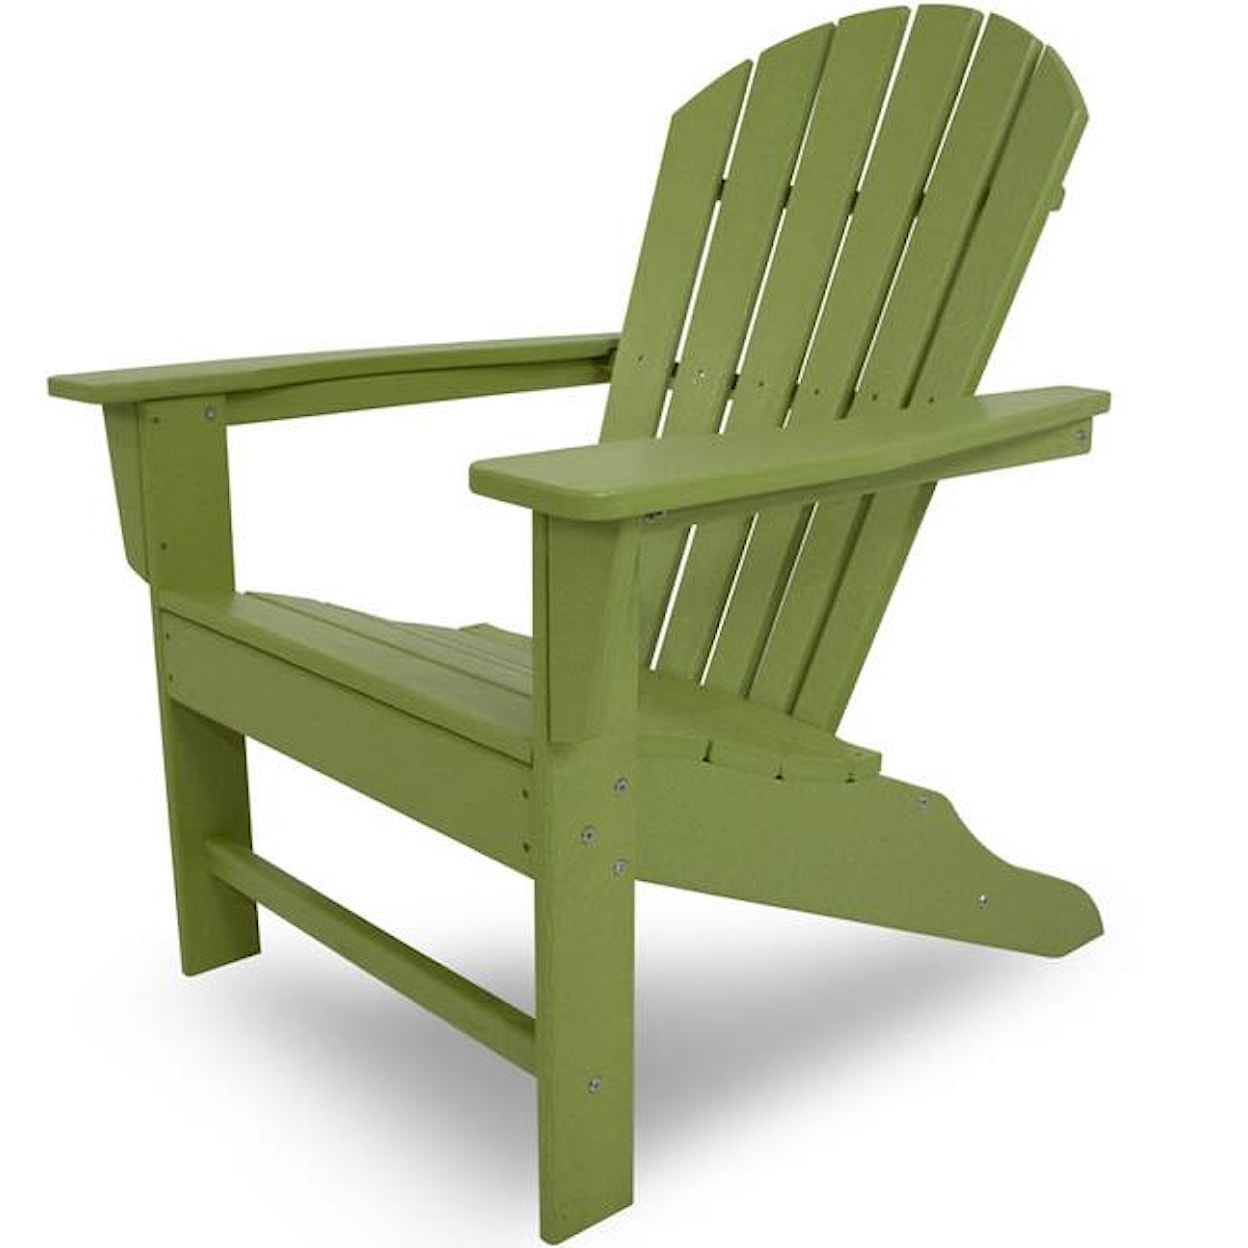 Polywood South Beach Adirondack Chair